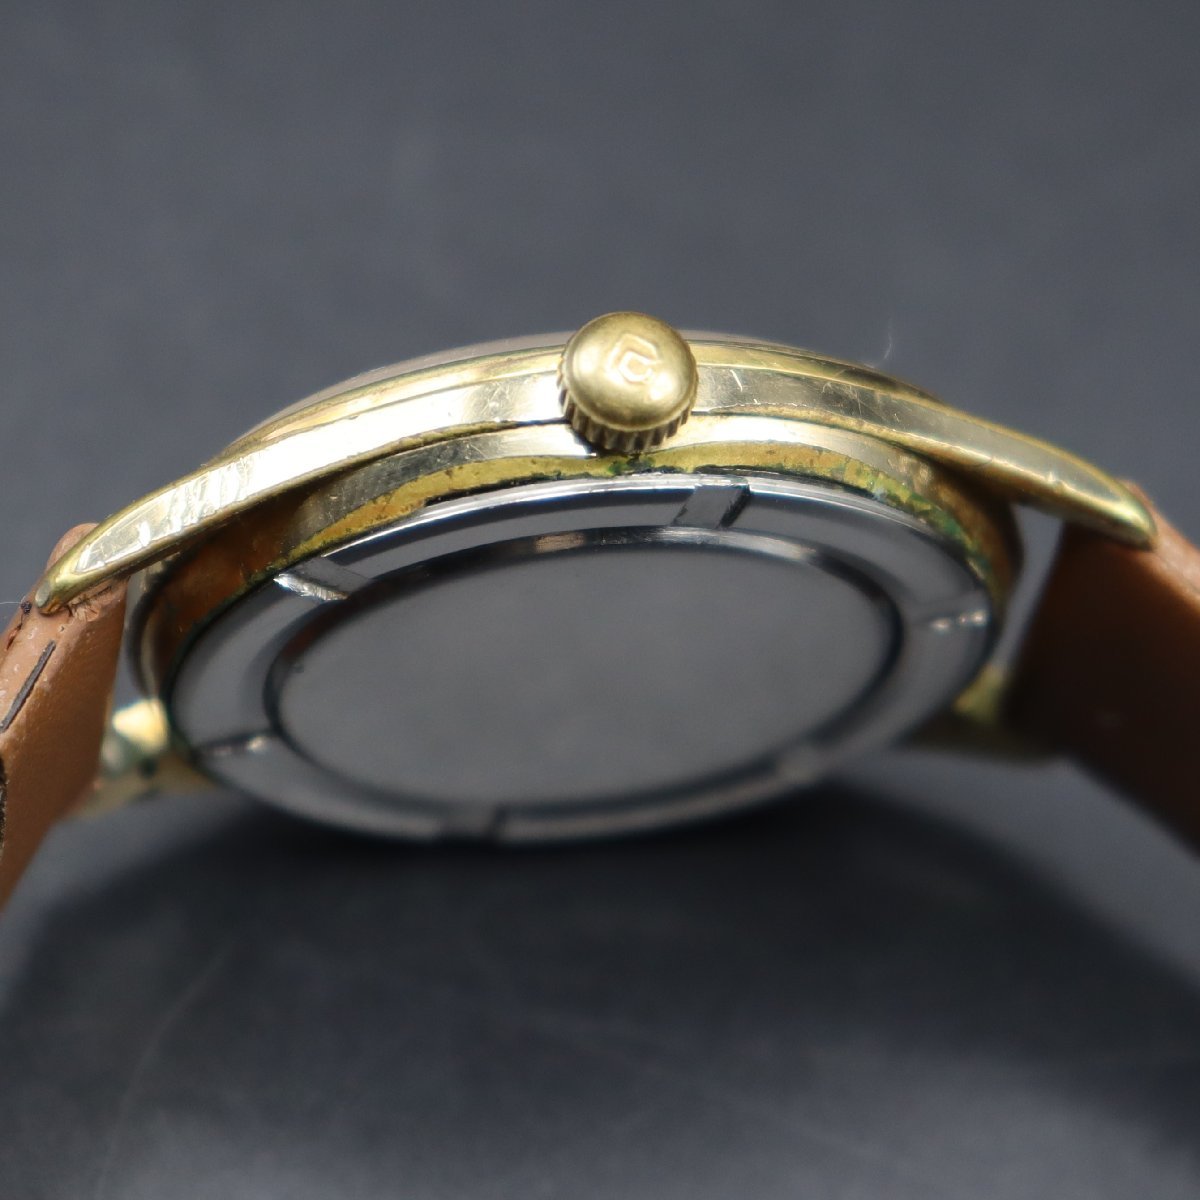 Chateau シャトー 手巻き 19石 シャチホコ ゴールドカラーケース 新品革ベルト アンティーク メンズ腕時計_画像6